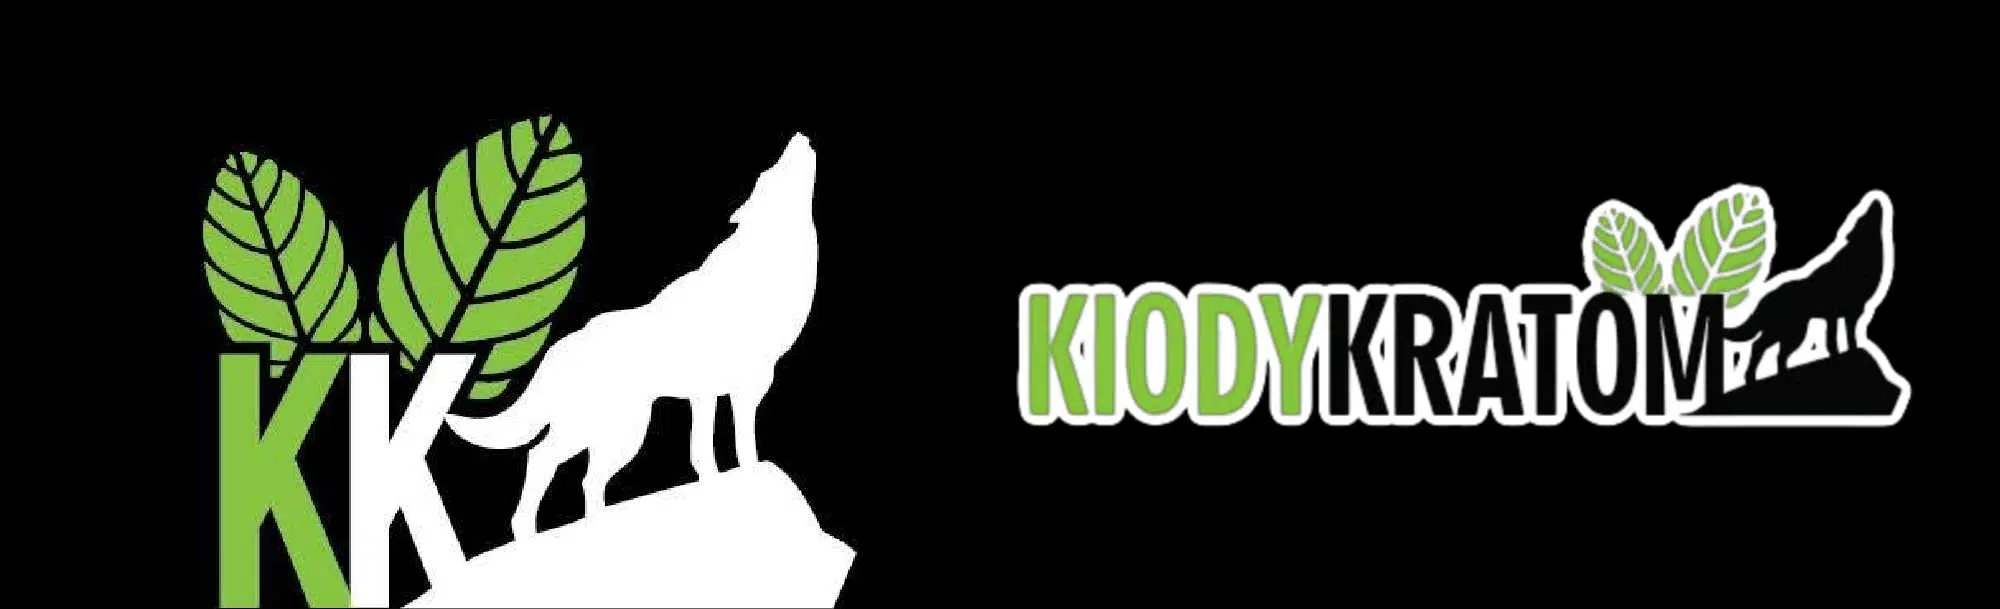 image of kidoy kratom logo